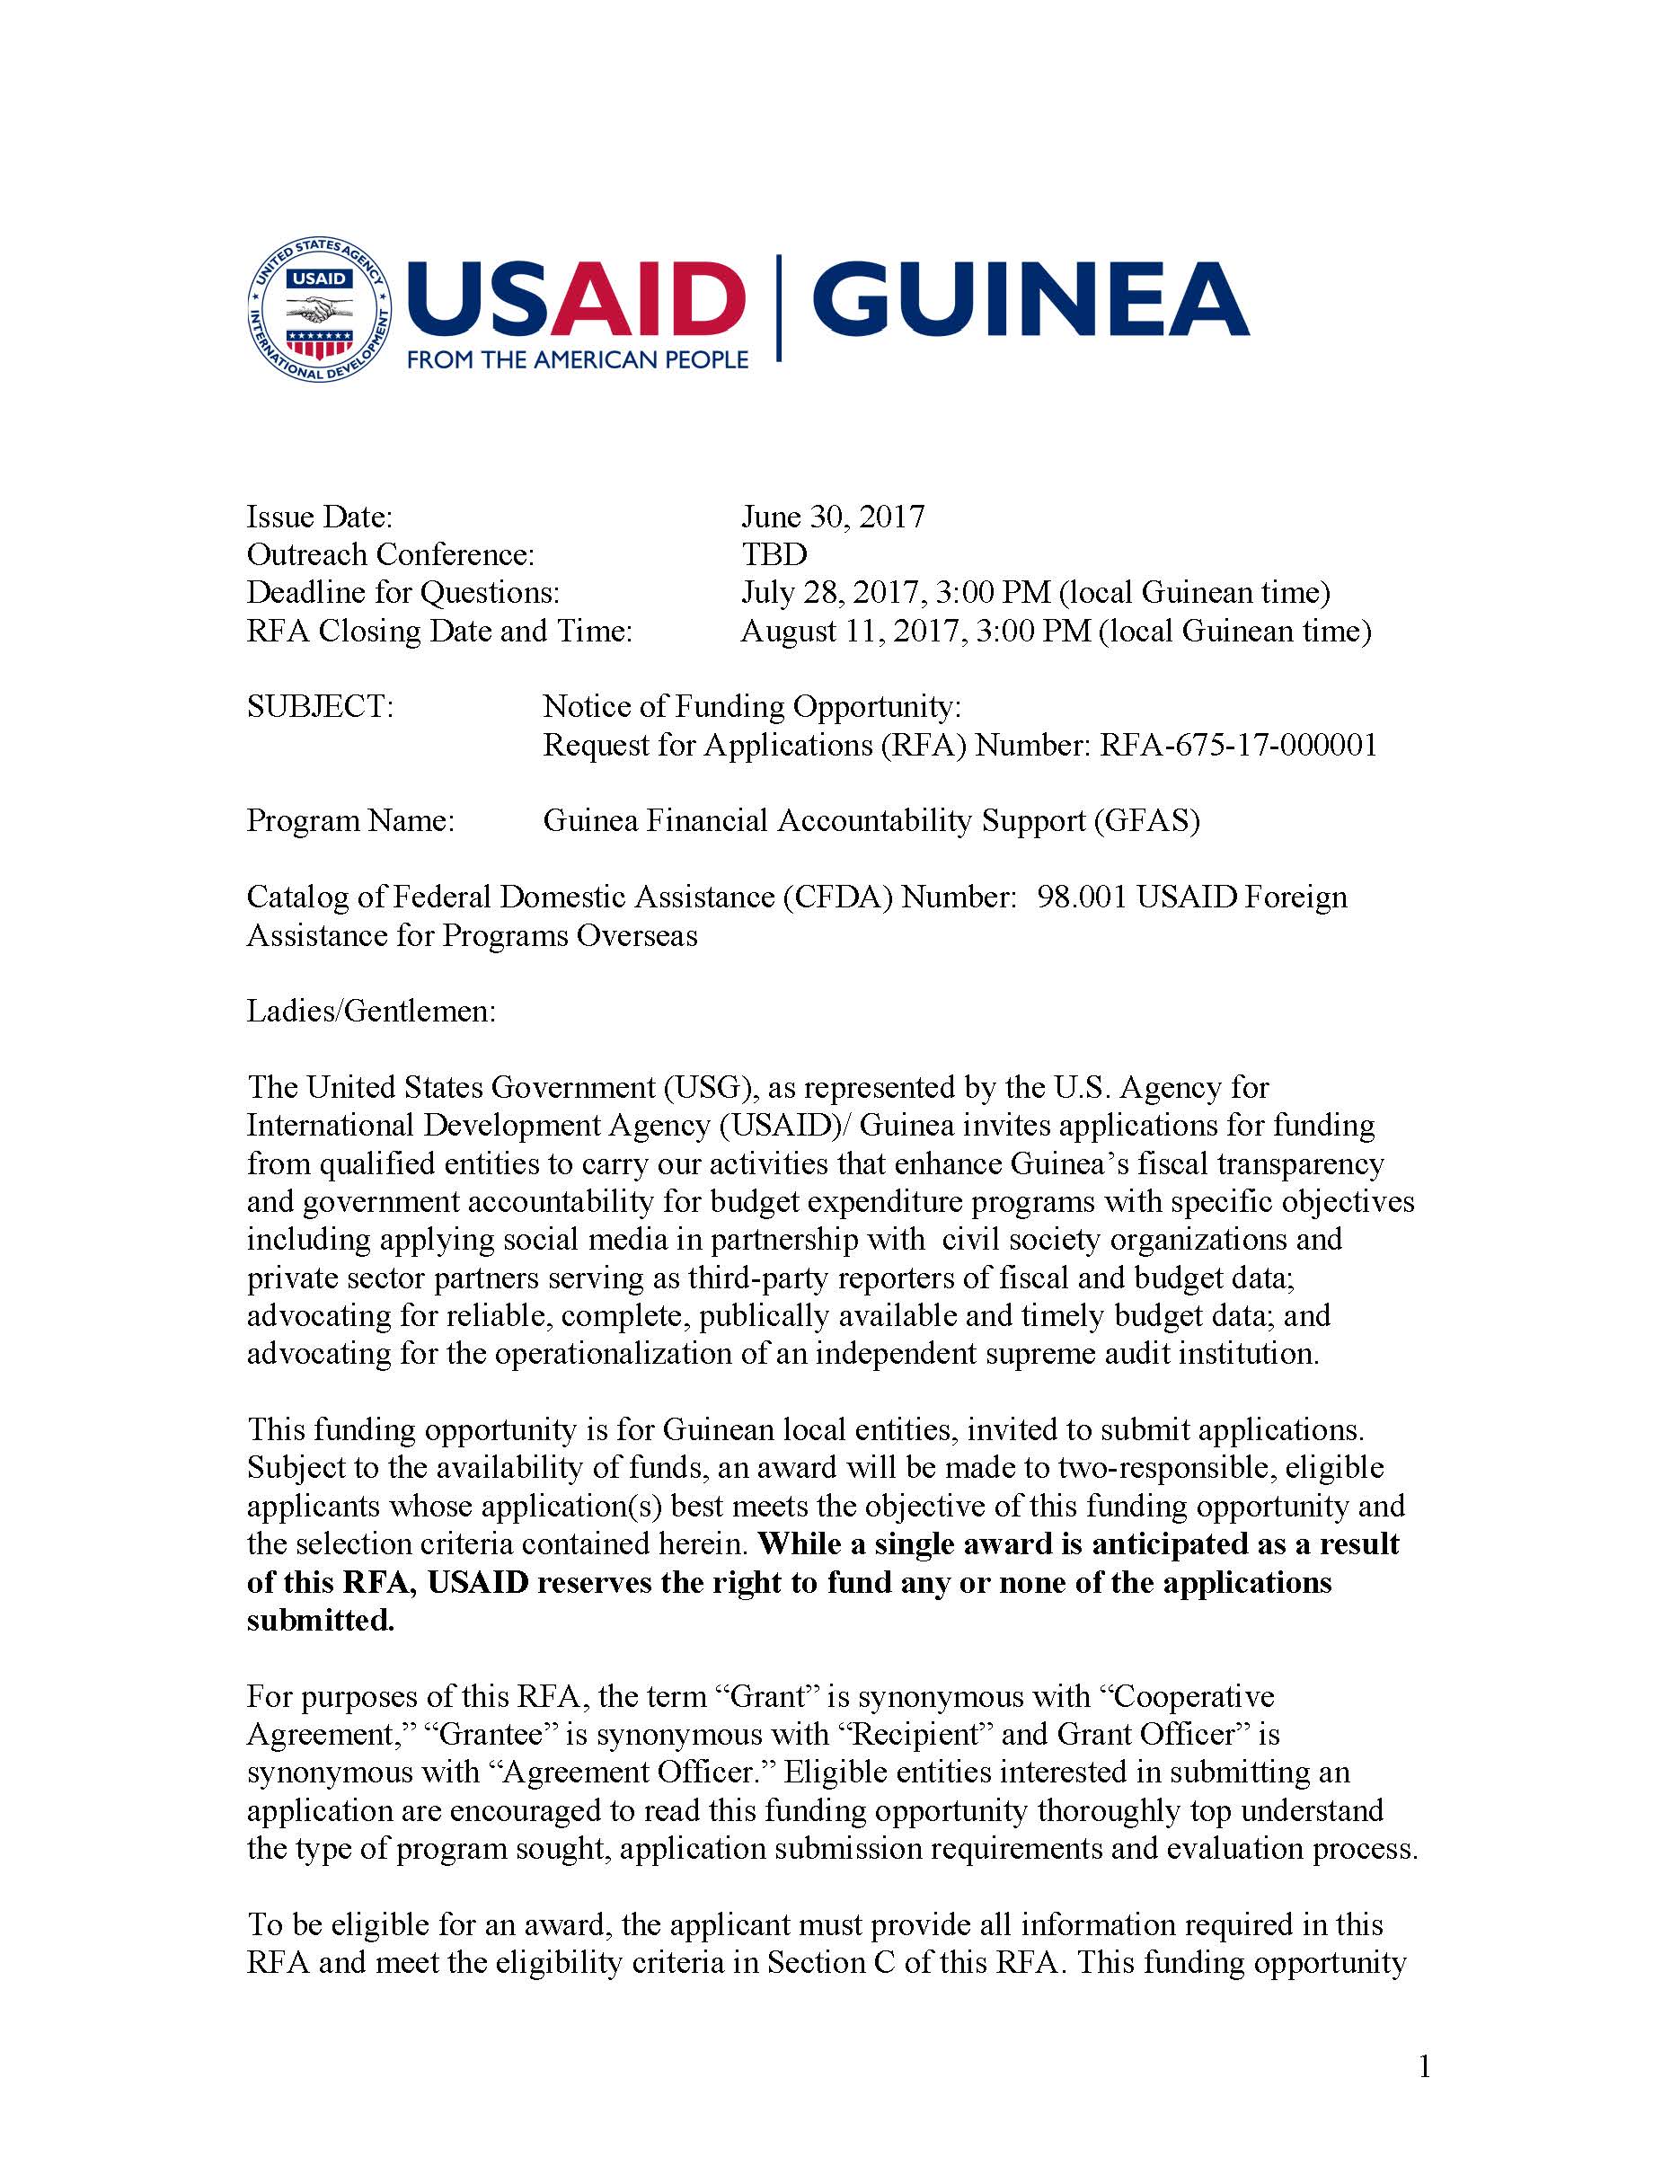 Guinea RFA GFAS Update